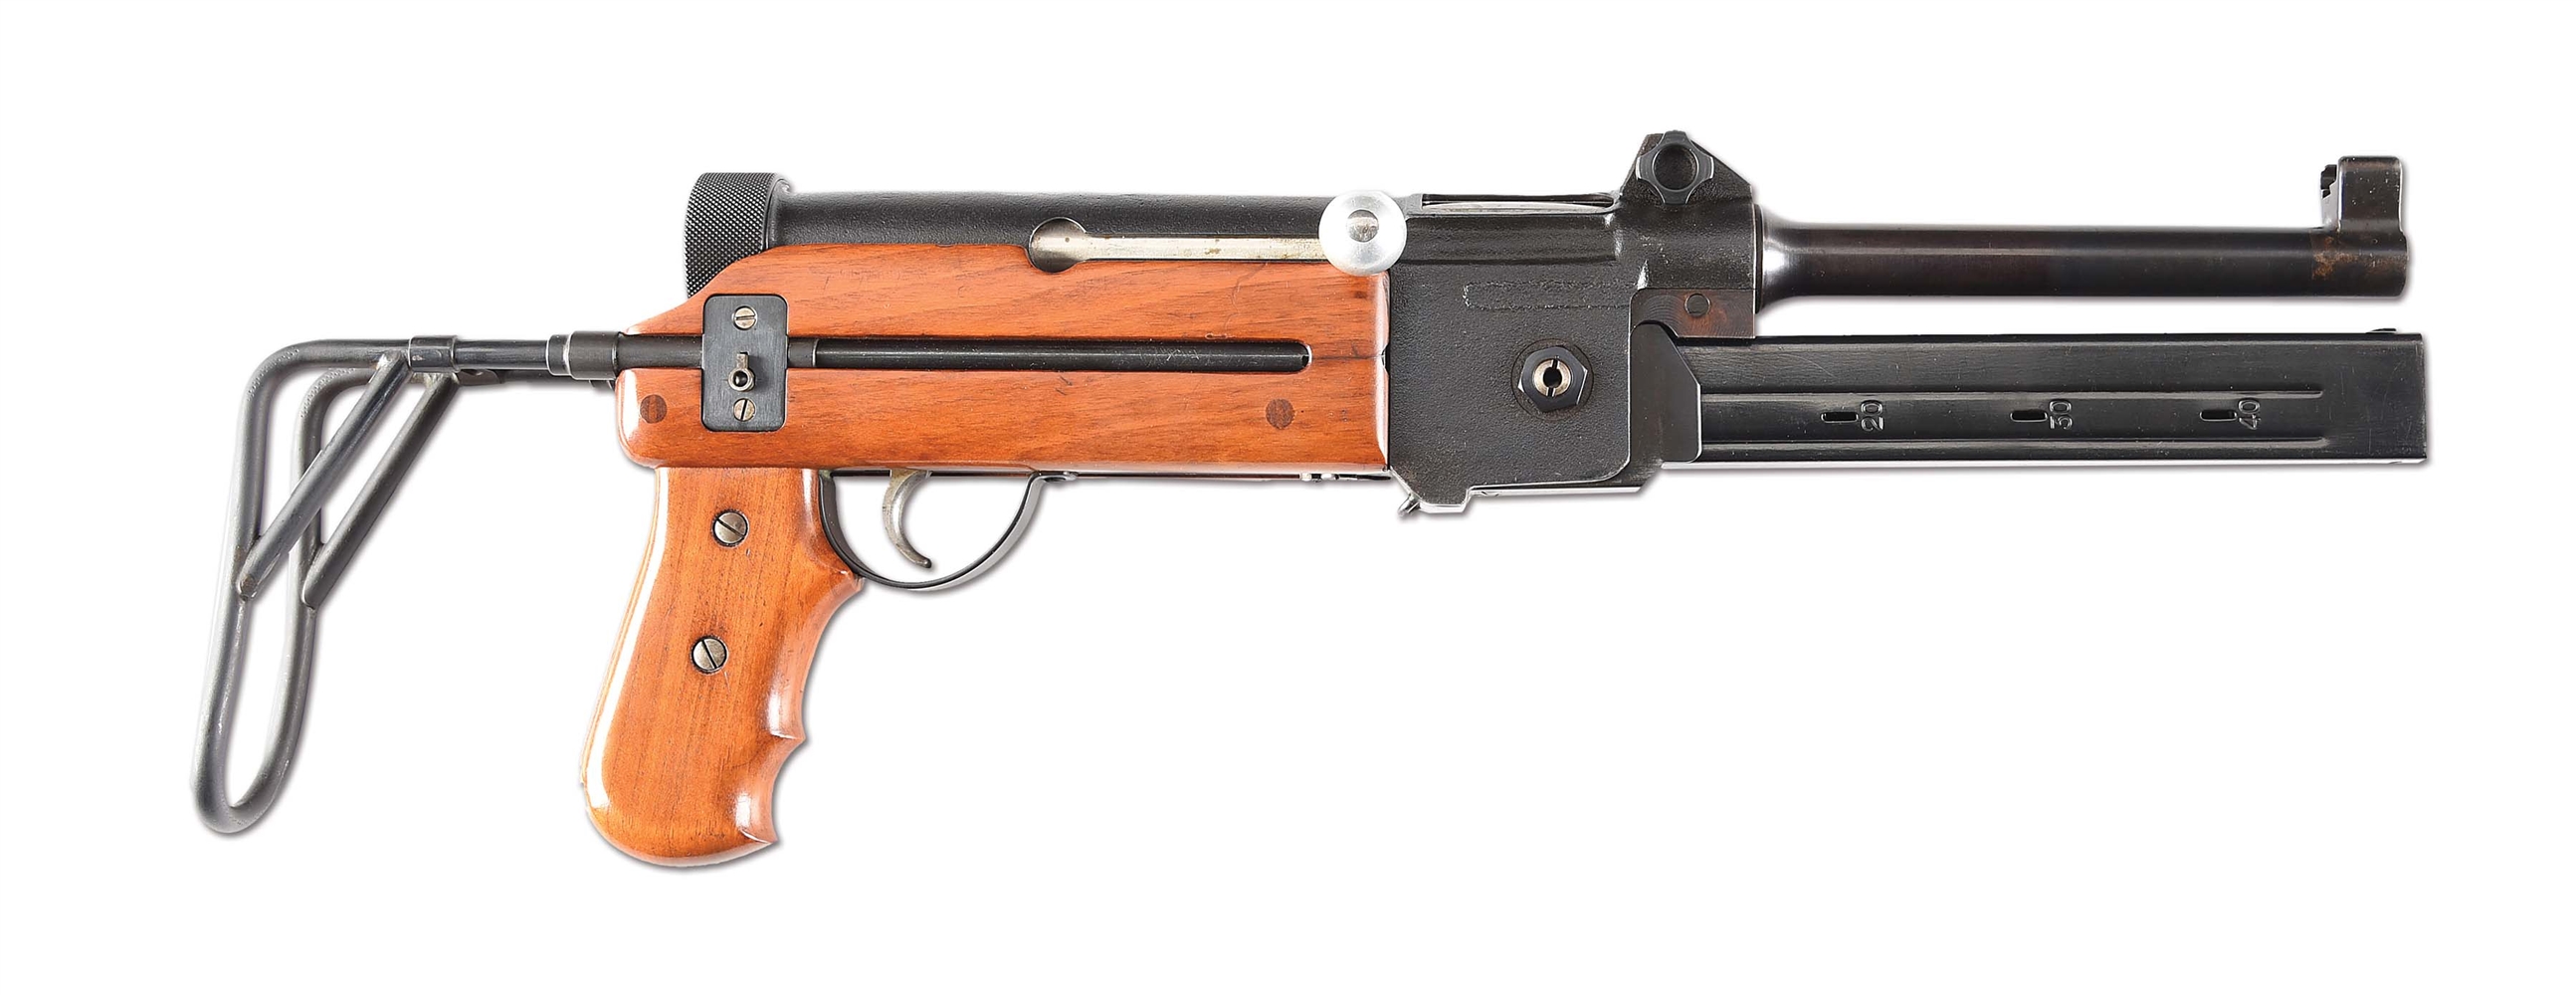 (N) FINE SIG NEUHAUSEN MP-48 SUBMACHINE GUN (CURIO & RELIC).